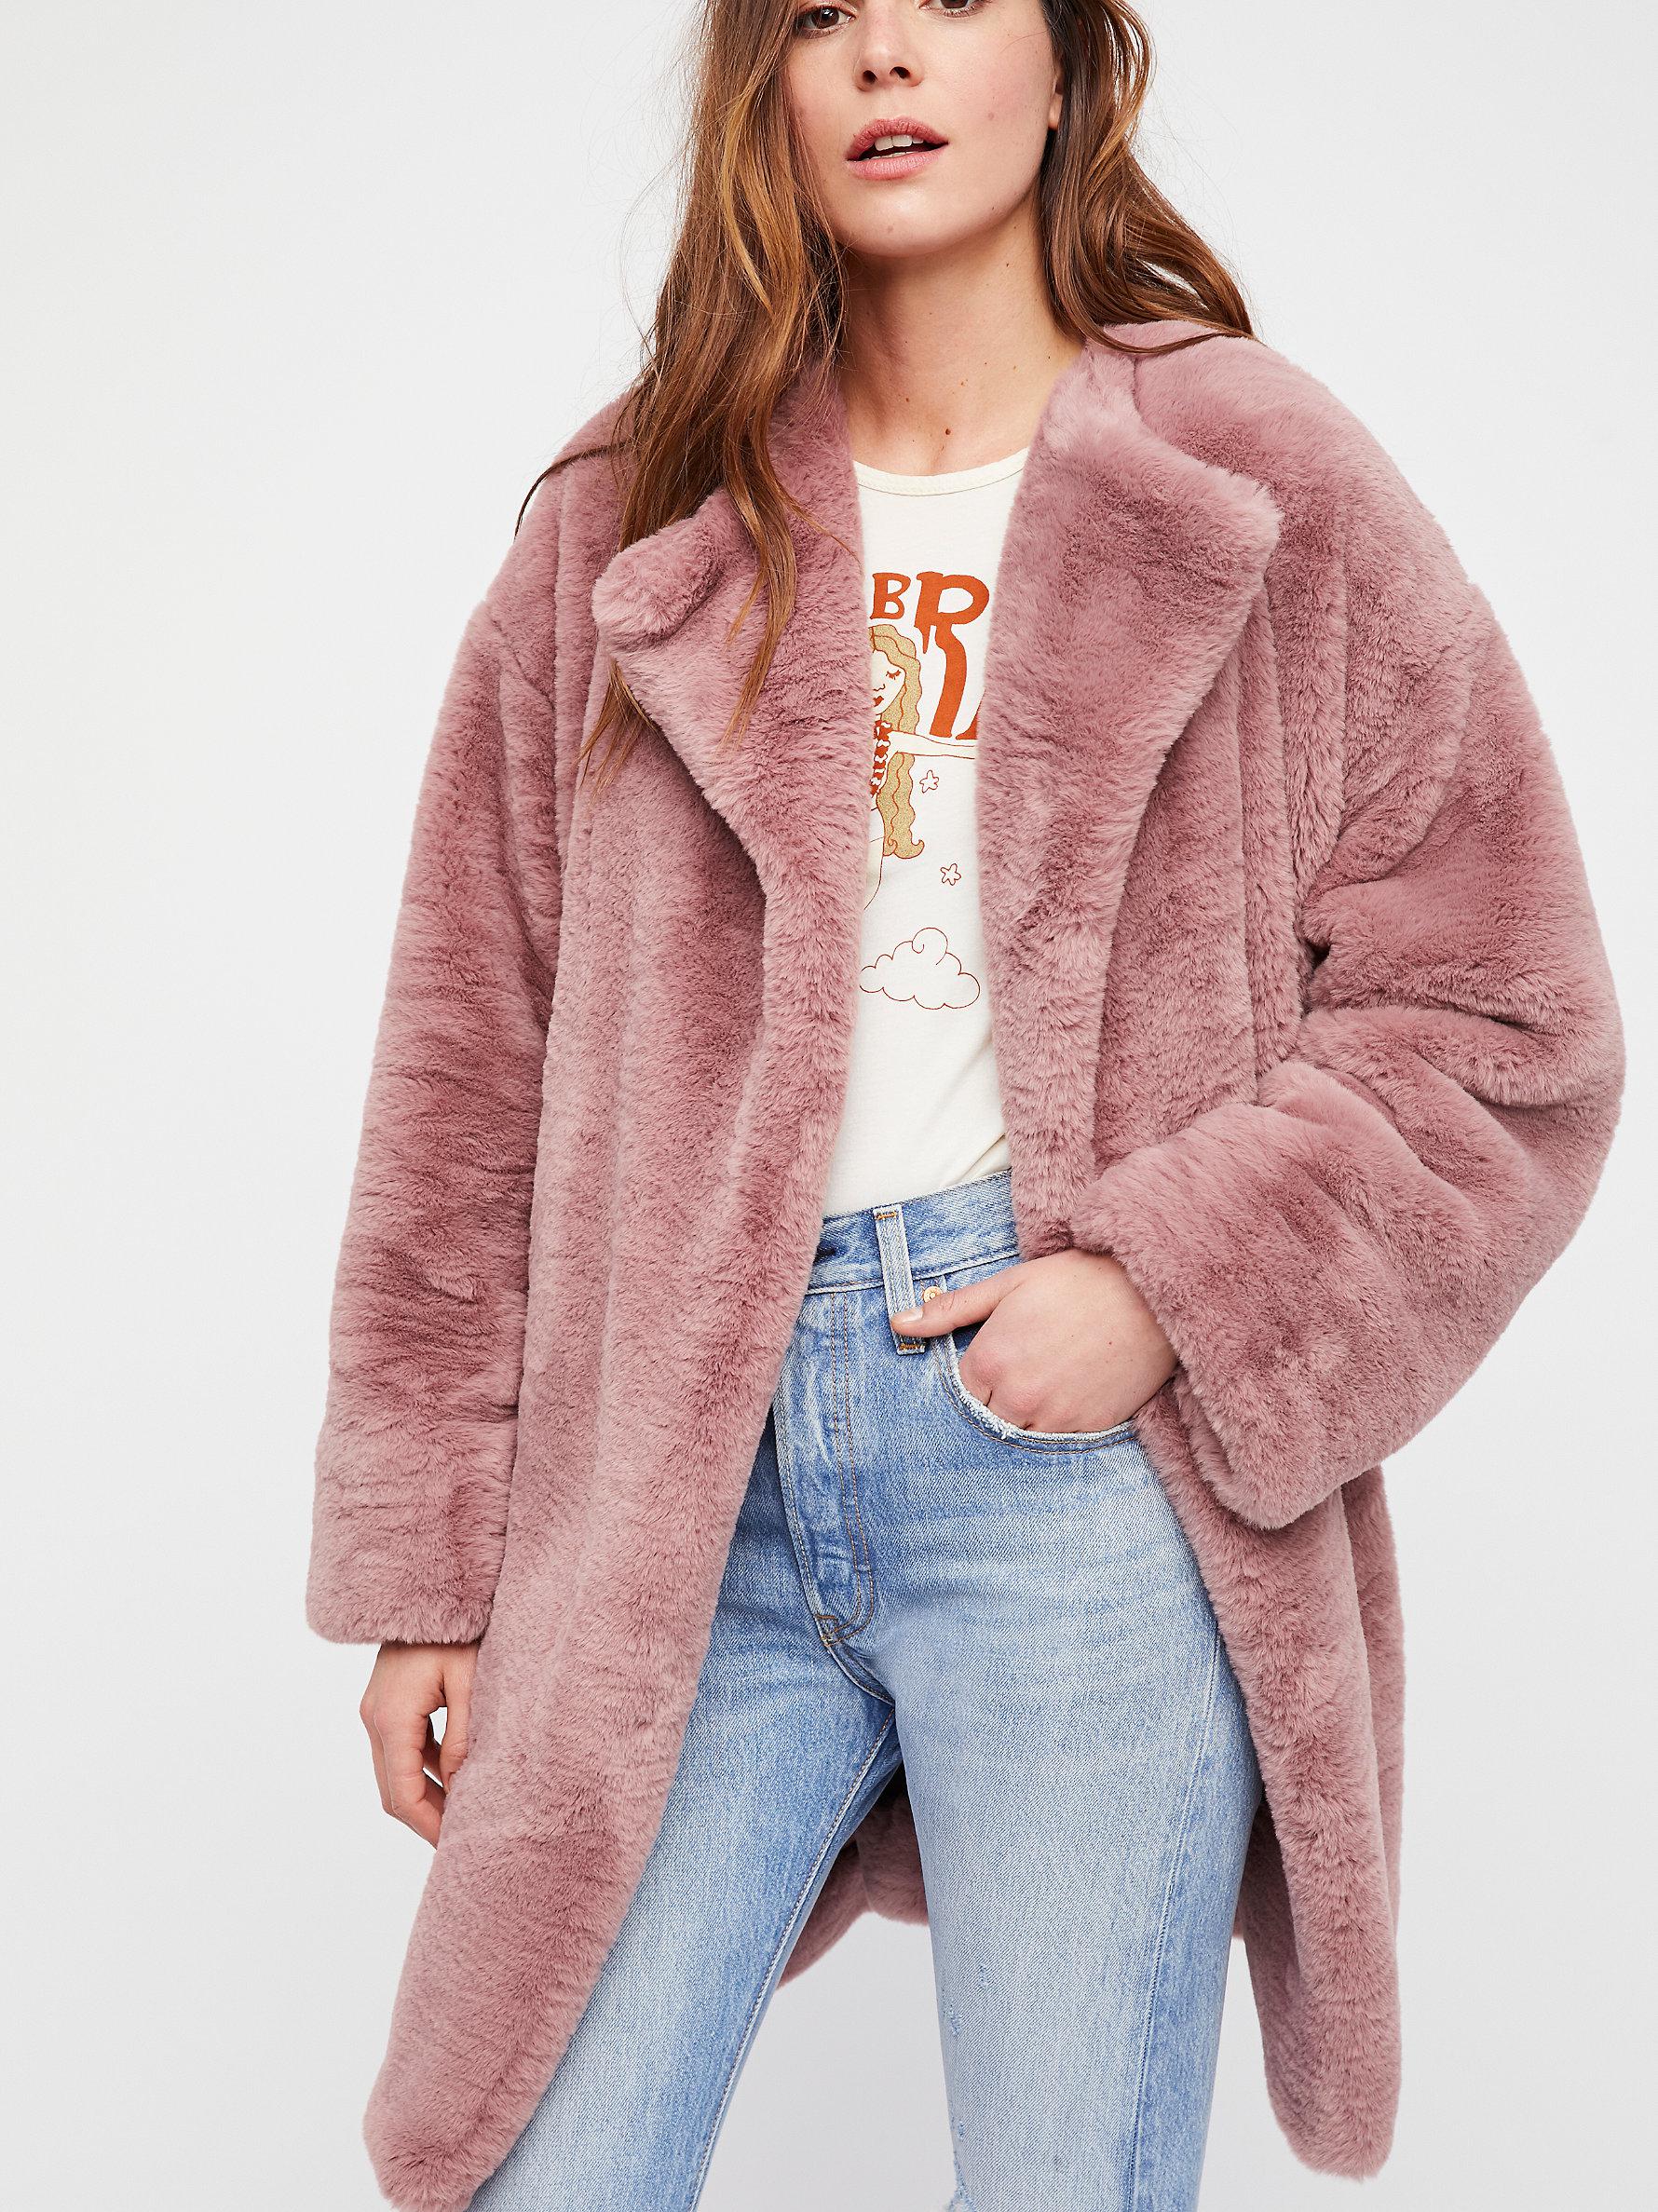 Free People Rita Fur Coat in Pink | Lyst